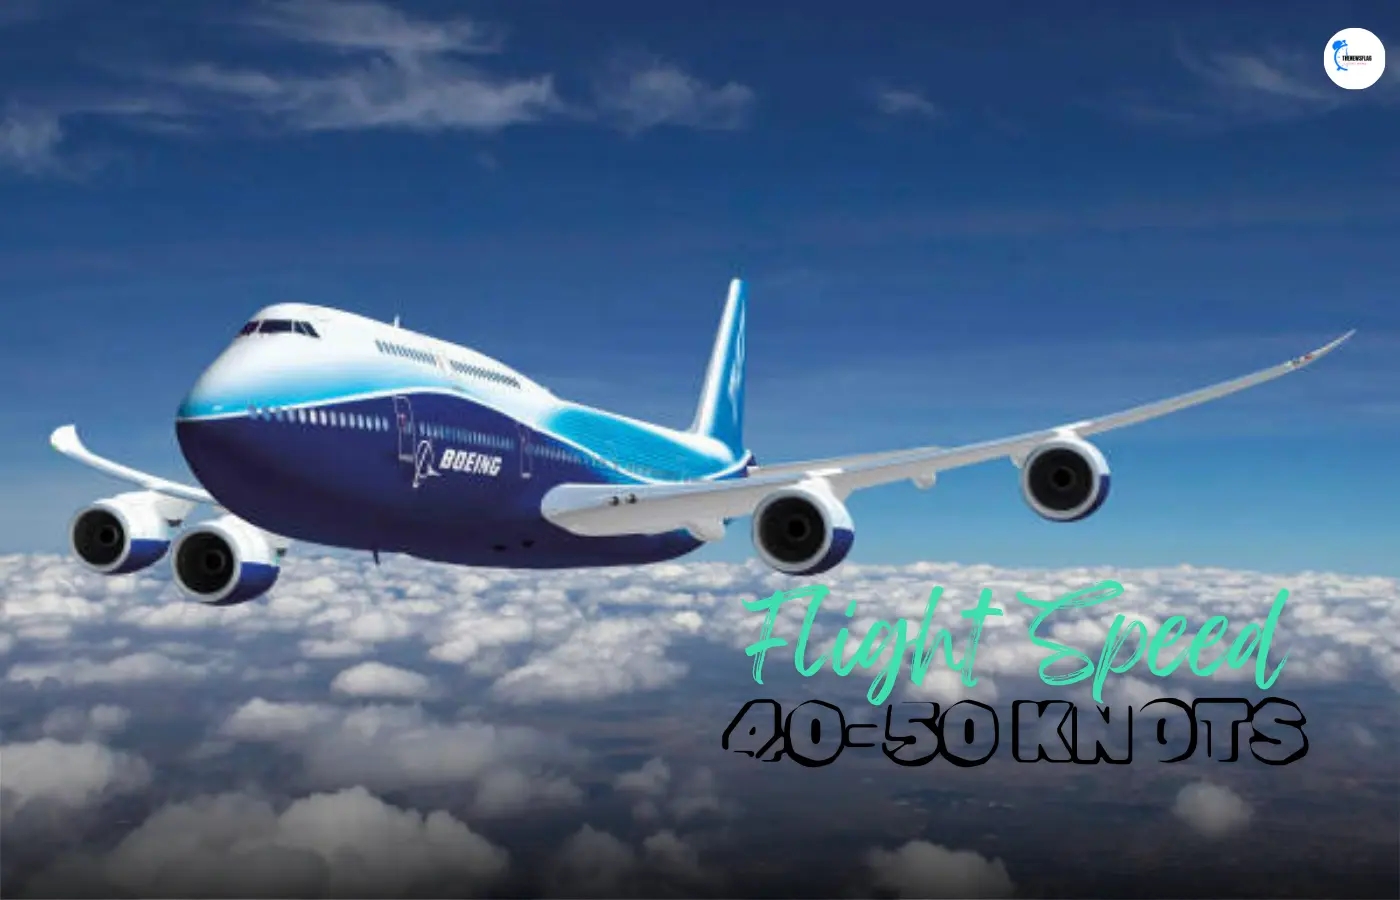 Landing Speed of Boeing 747